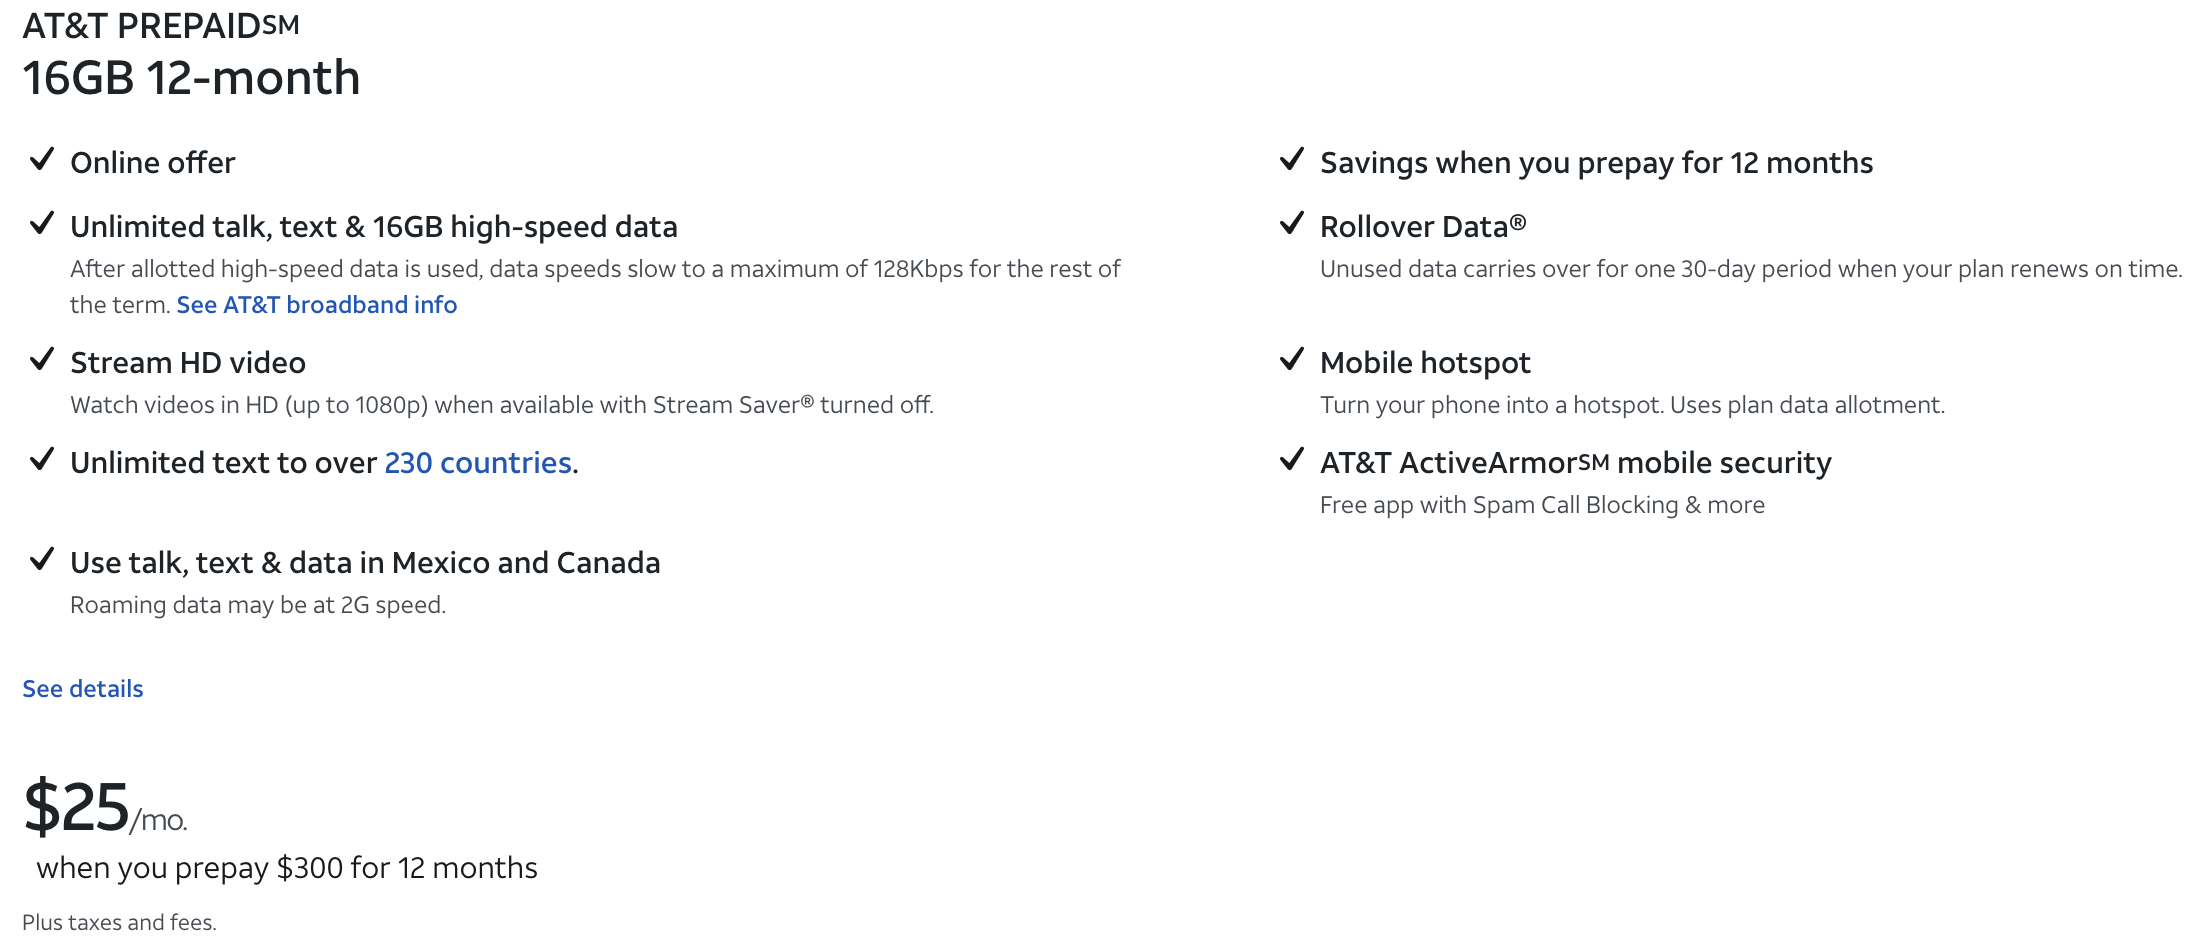 AT&T Prepaid 12-month Plan